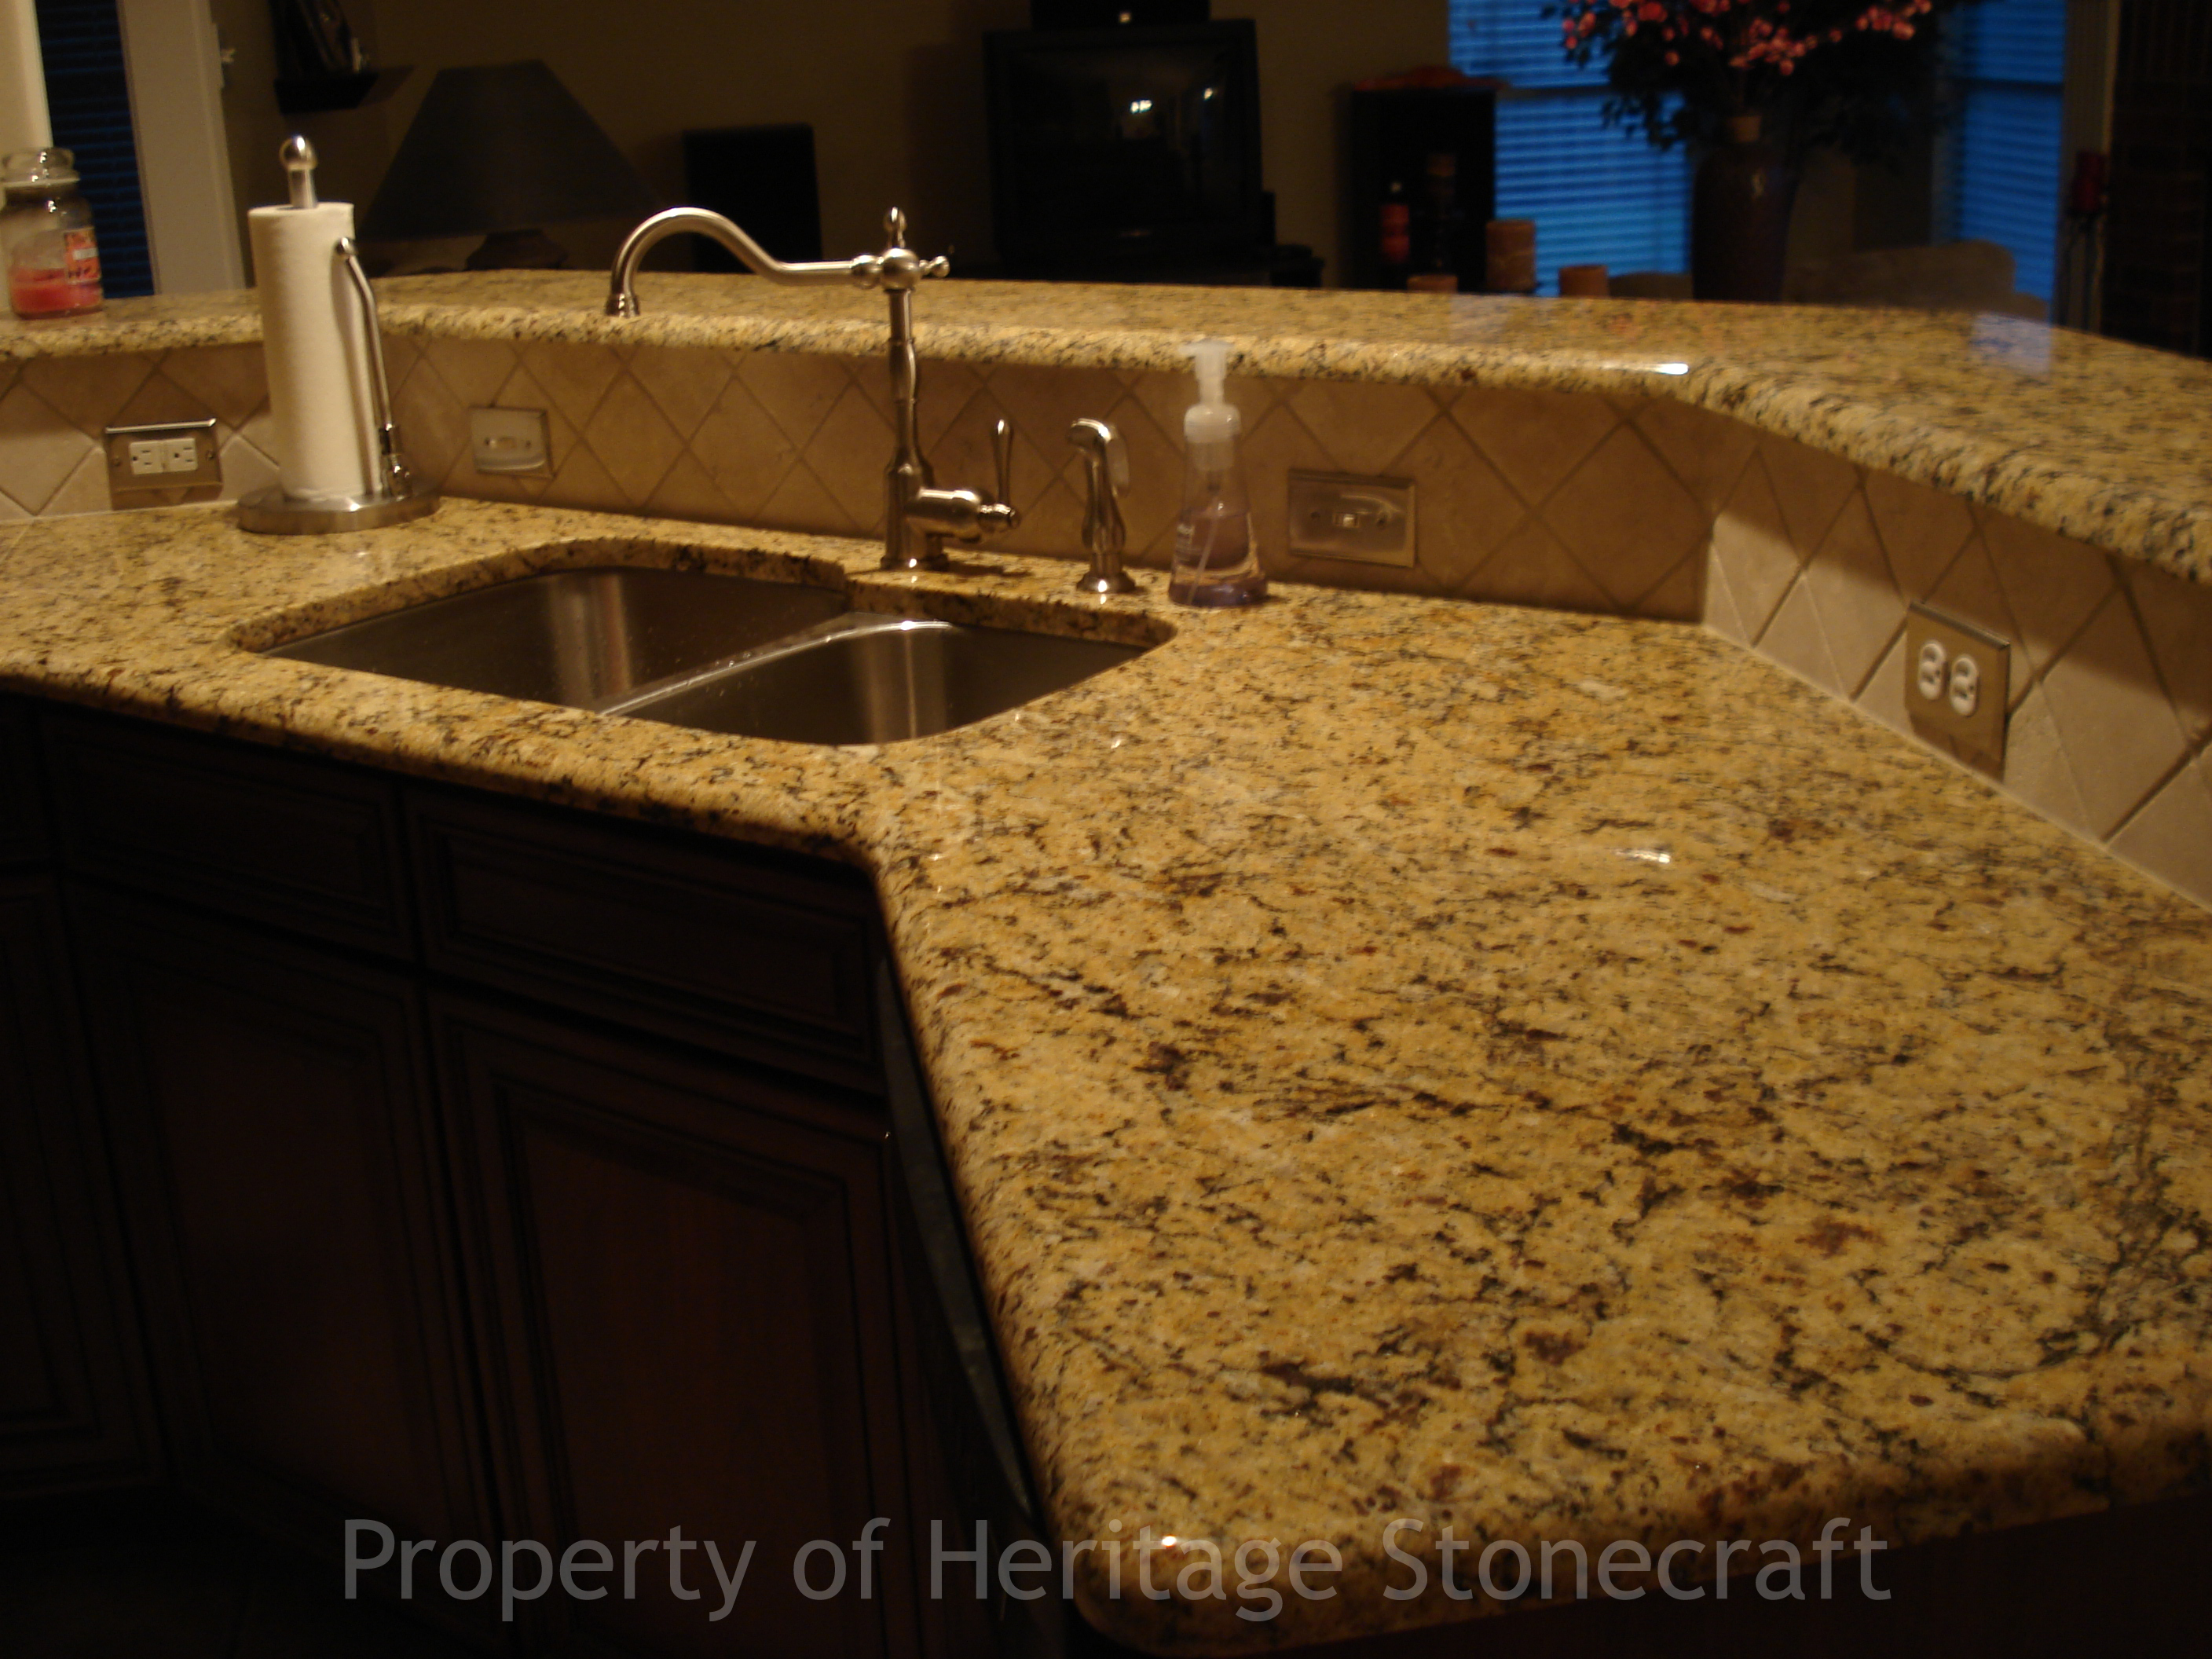 Granite Countertops Marble Soapstone Tile Cabinets Backsplashes